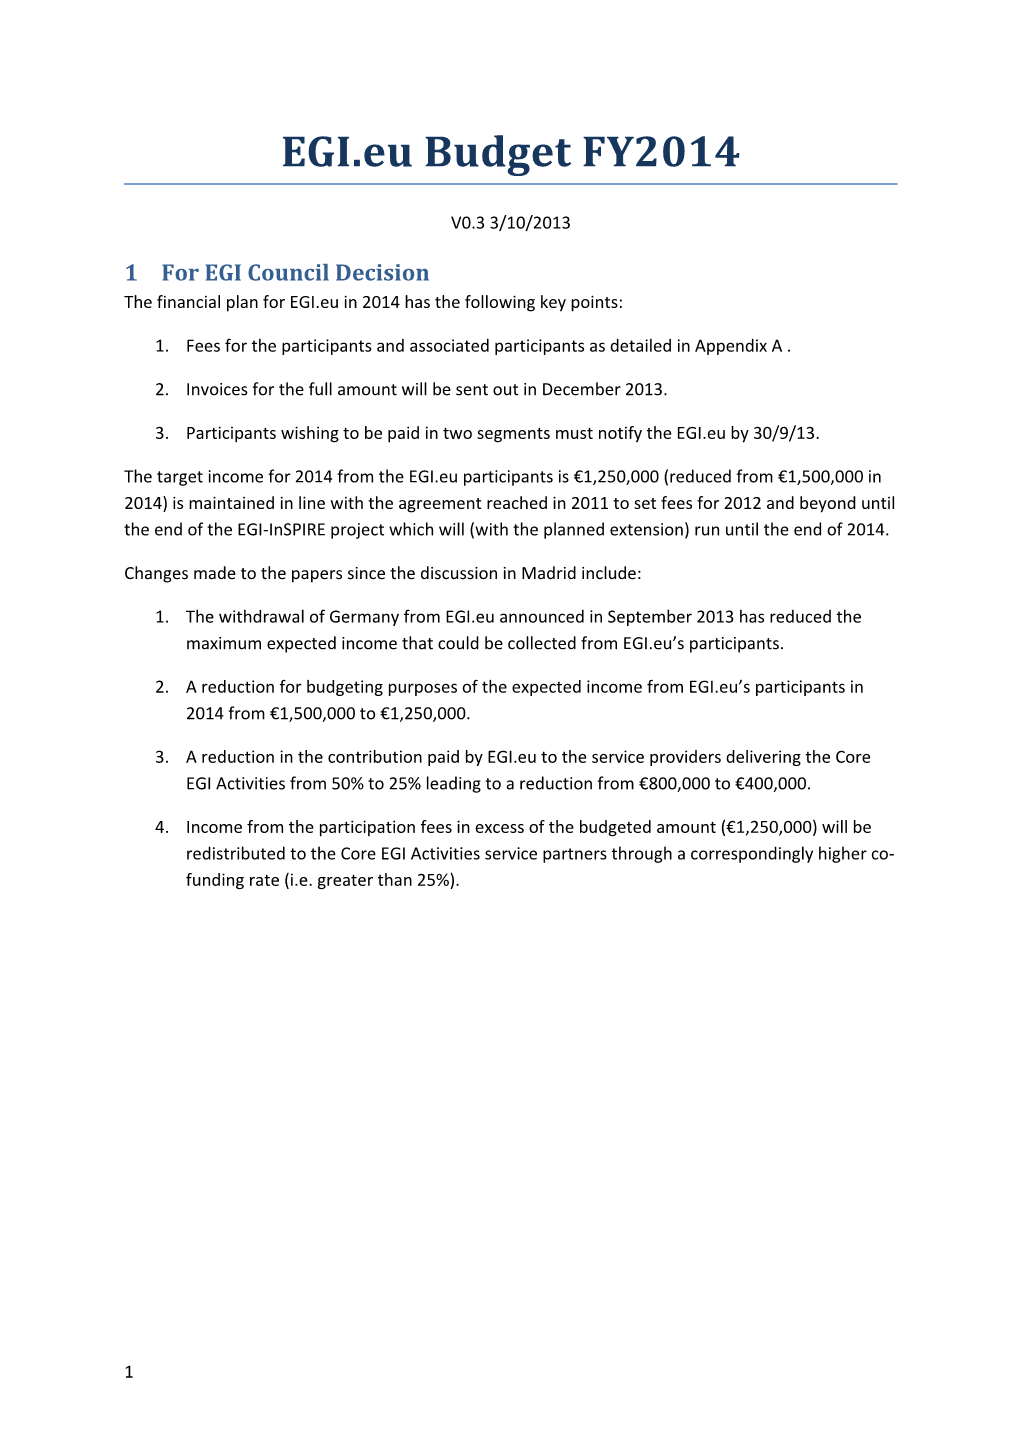 The Financial Plan for EGI.Eu in 2014 Has the Following Key Points